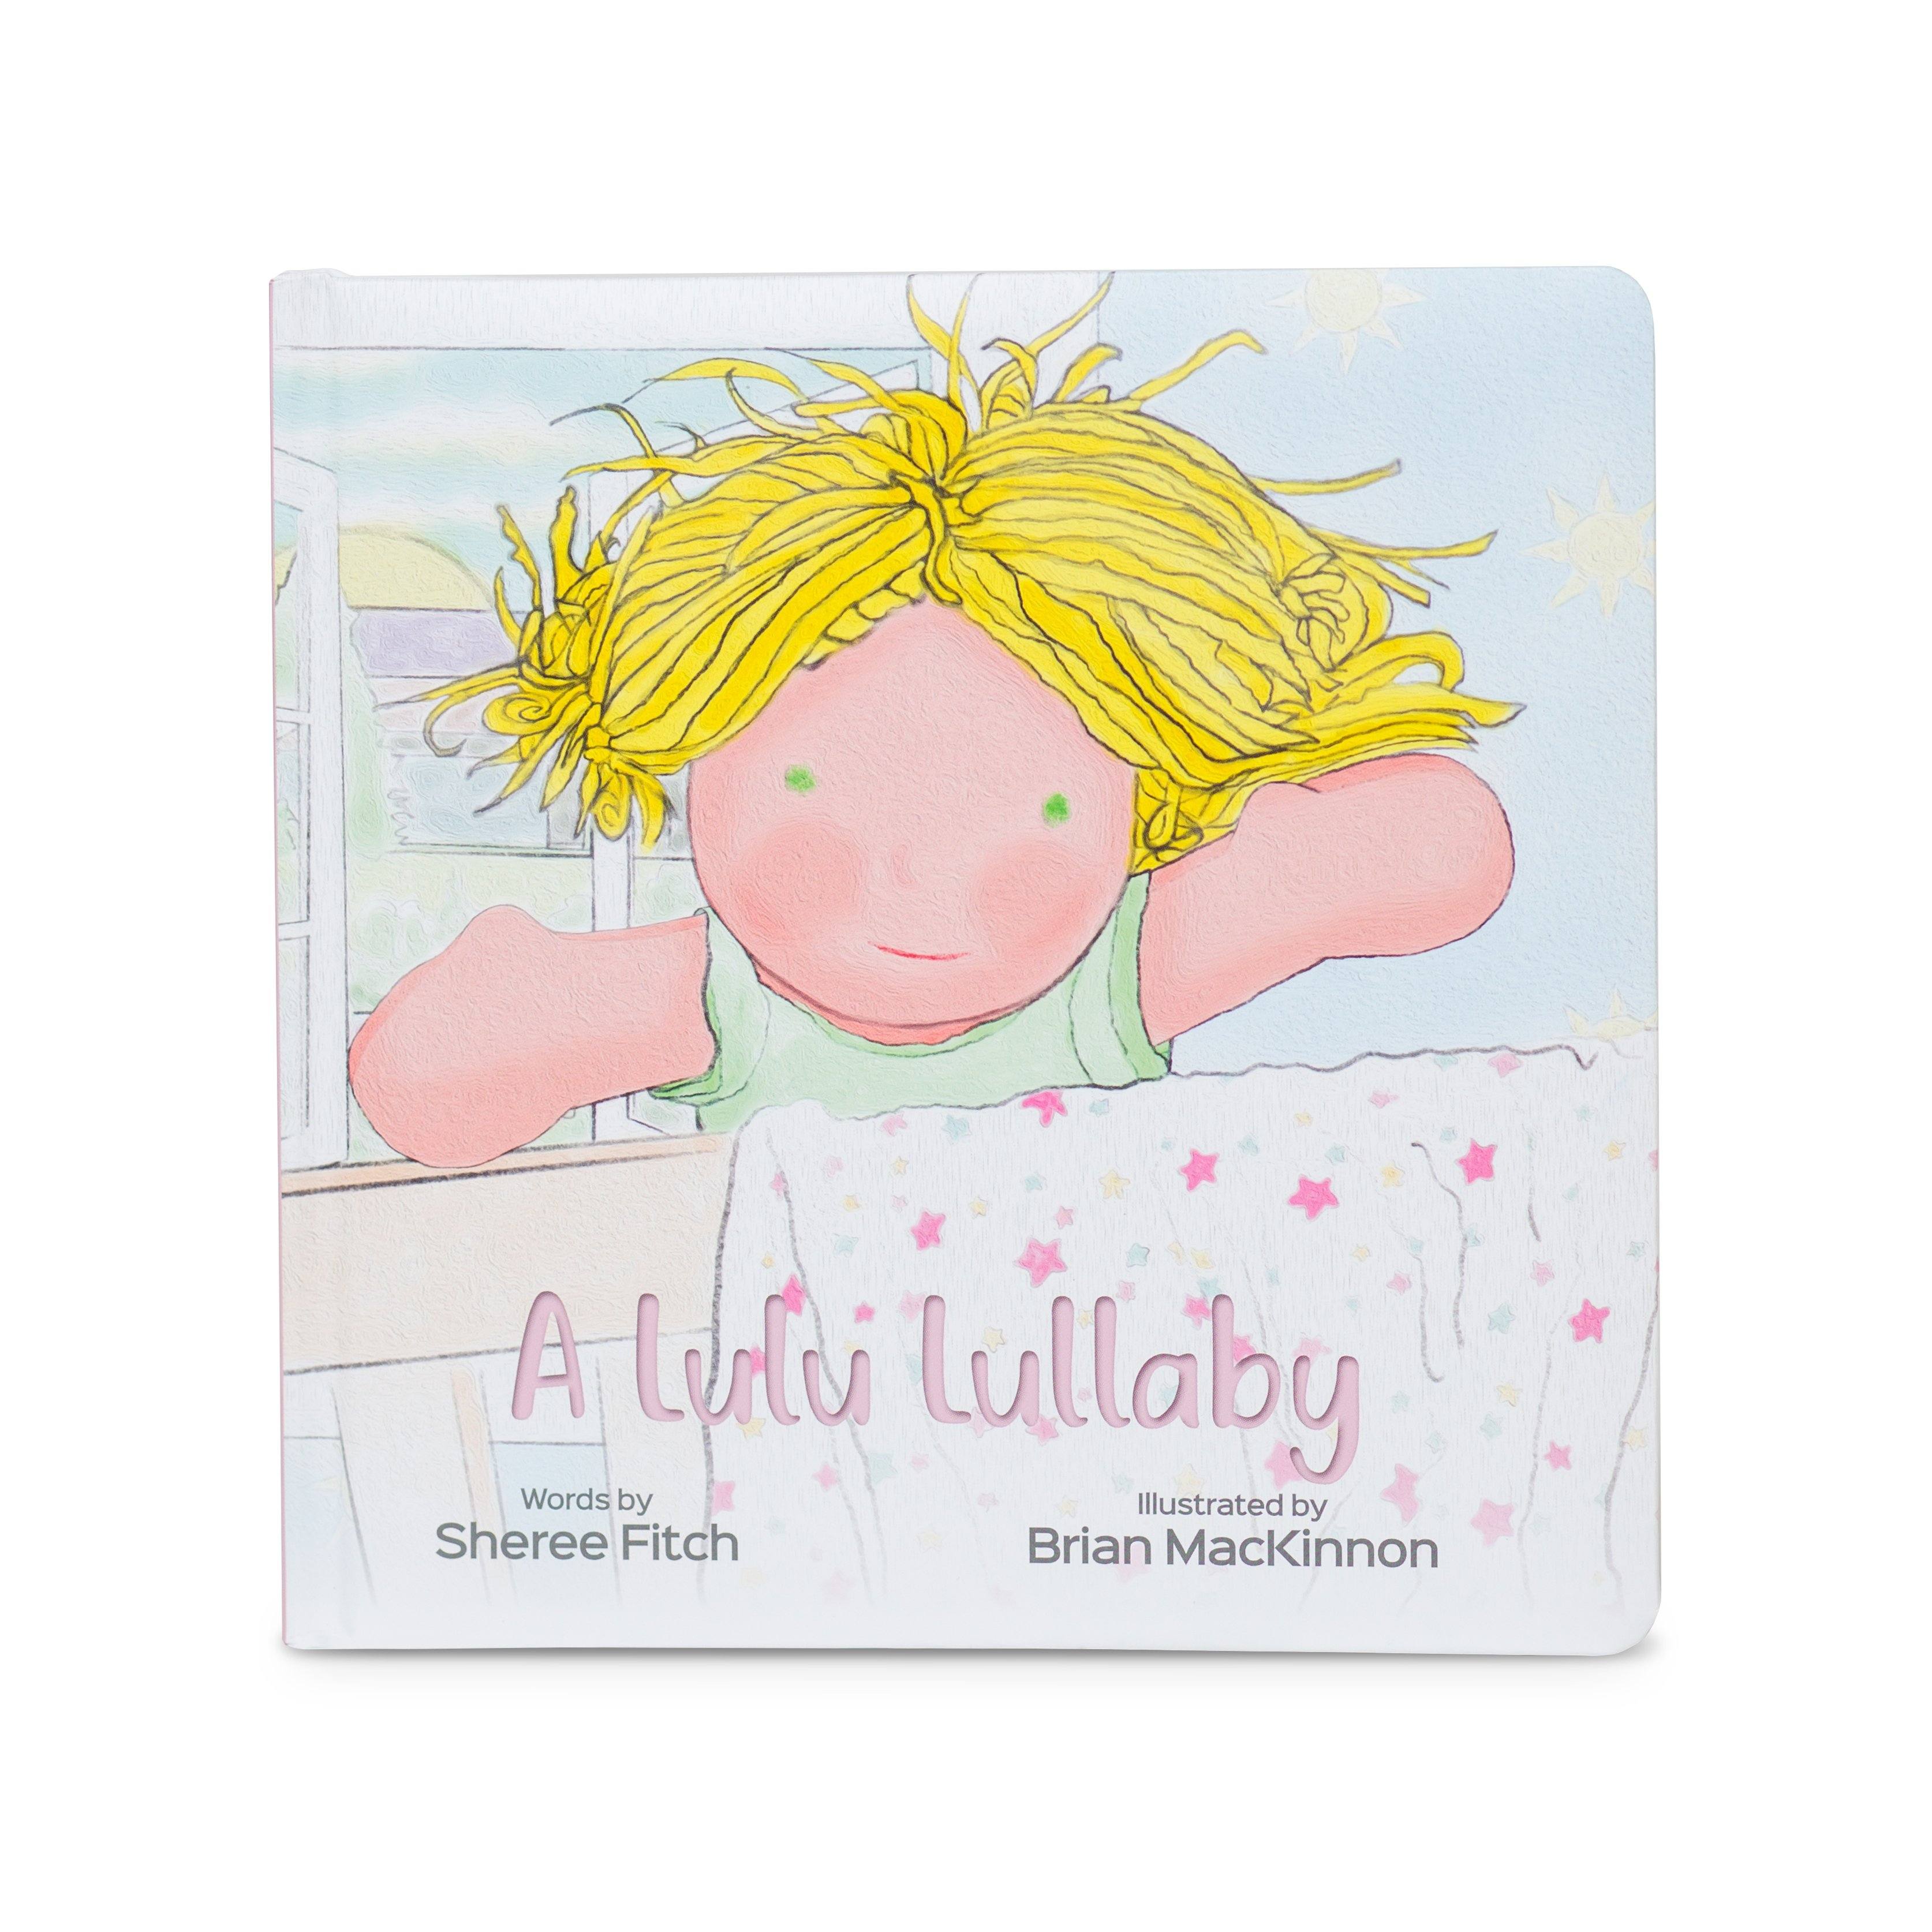 A Lulu Lullaby Book